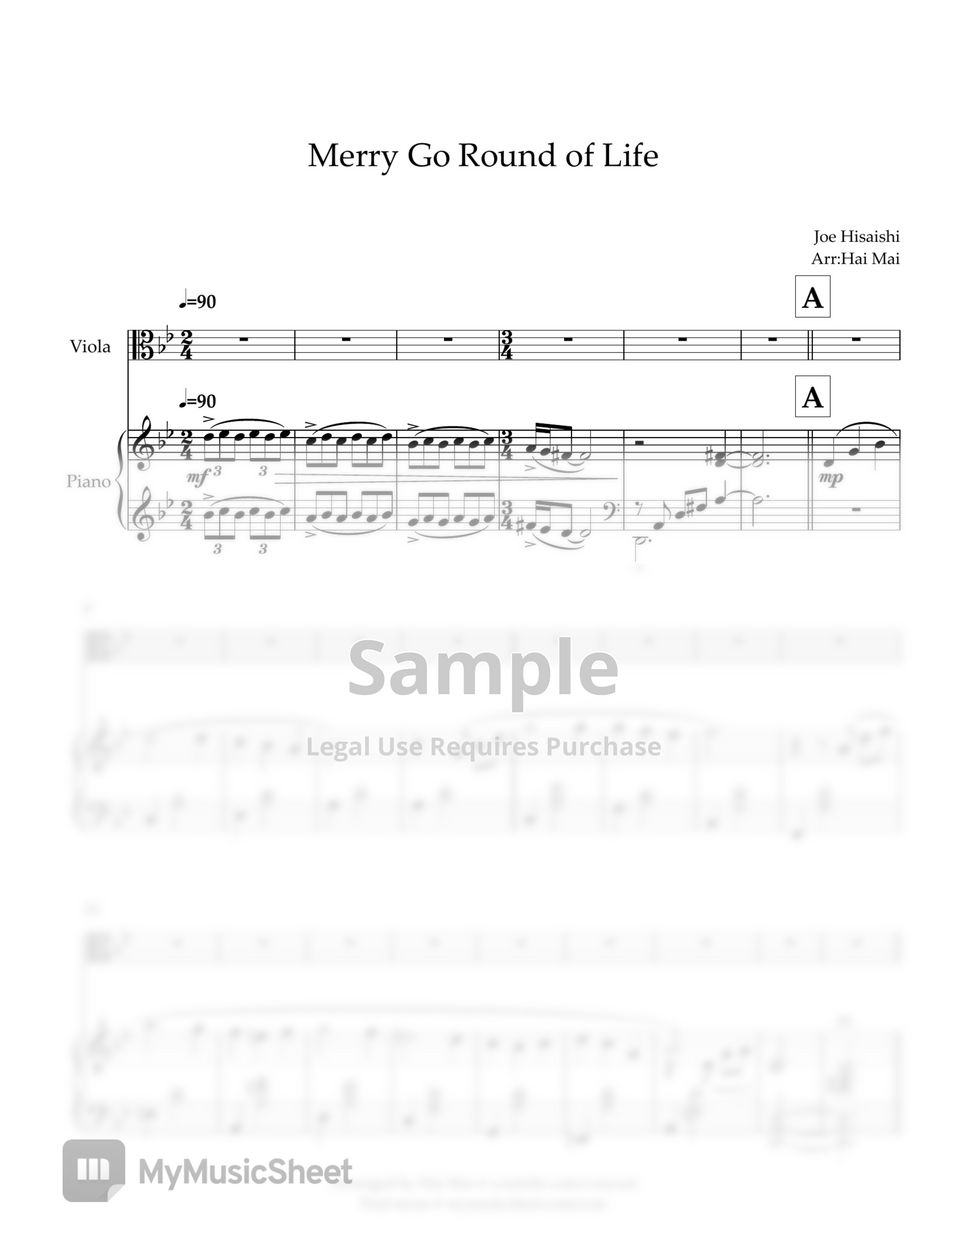 Joe Hisaishi - Merry Go Round of Life for Viola solo (easy) and Piano Accompaniment by Hai Mai